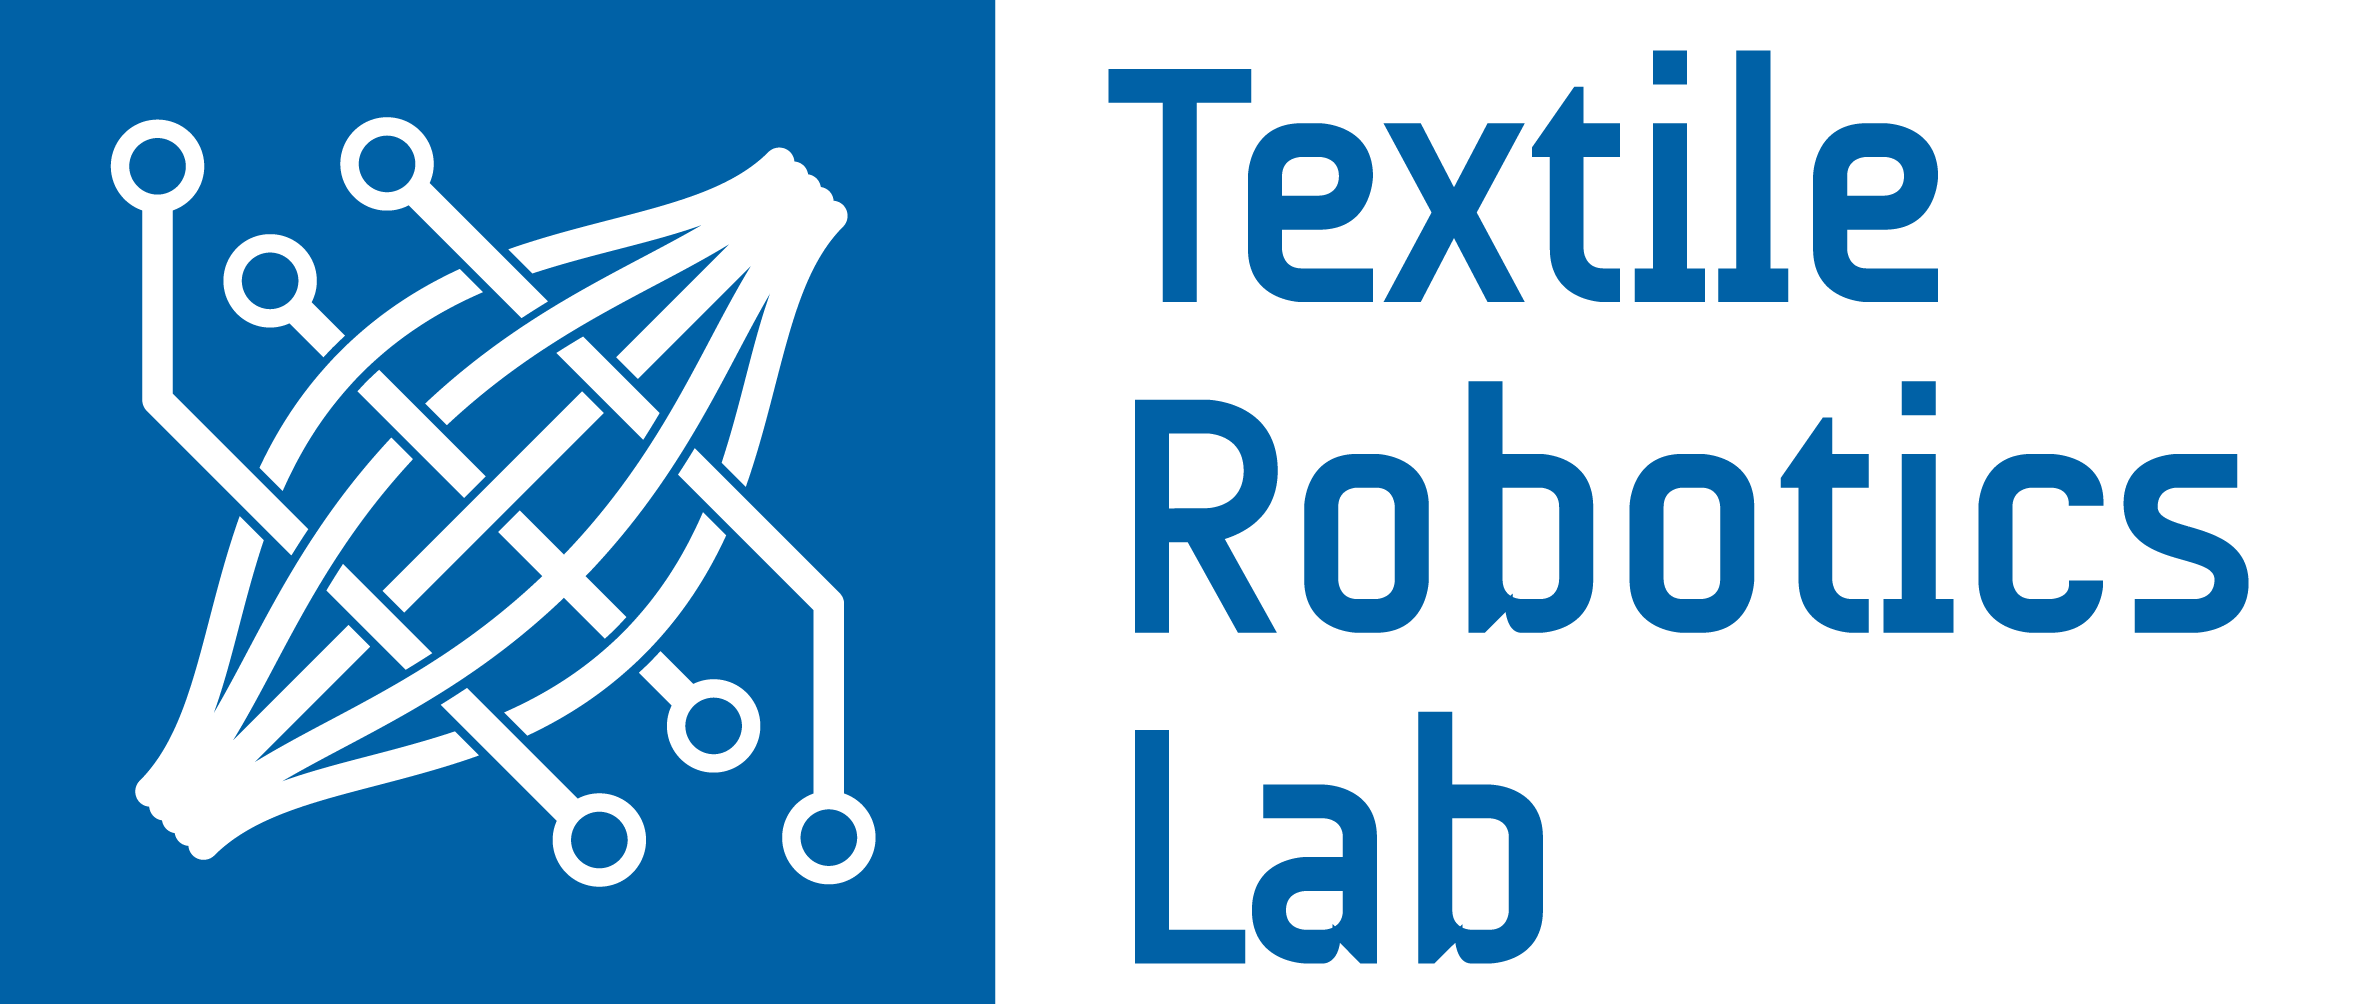 logo textile robotics